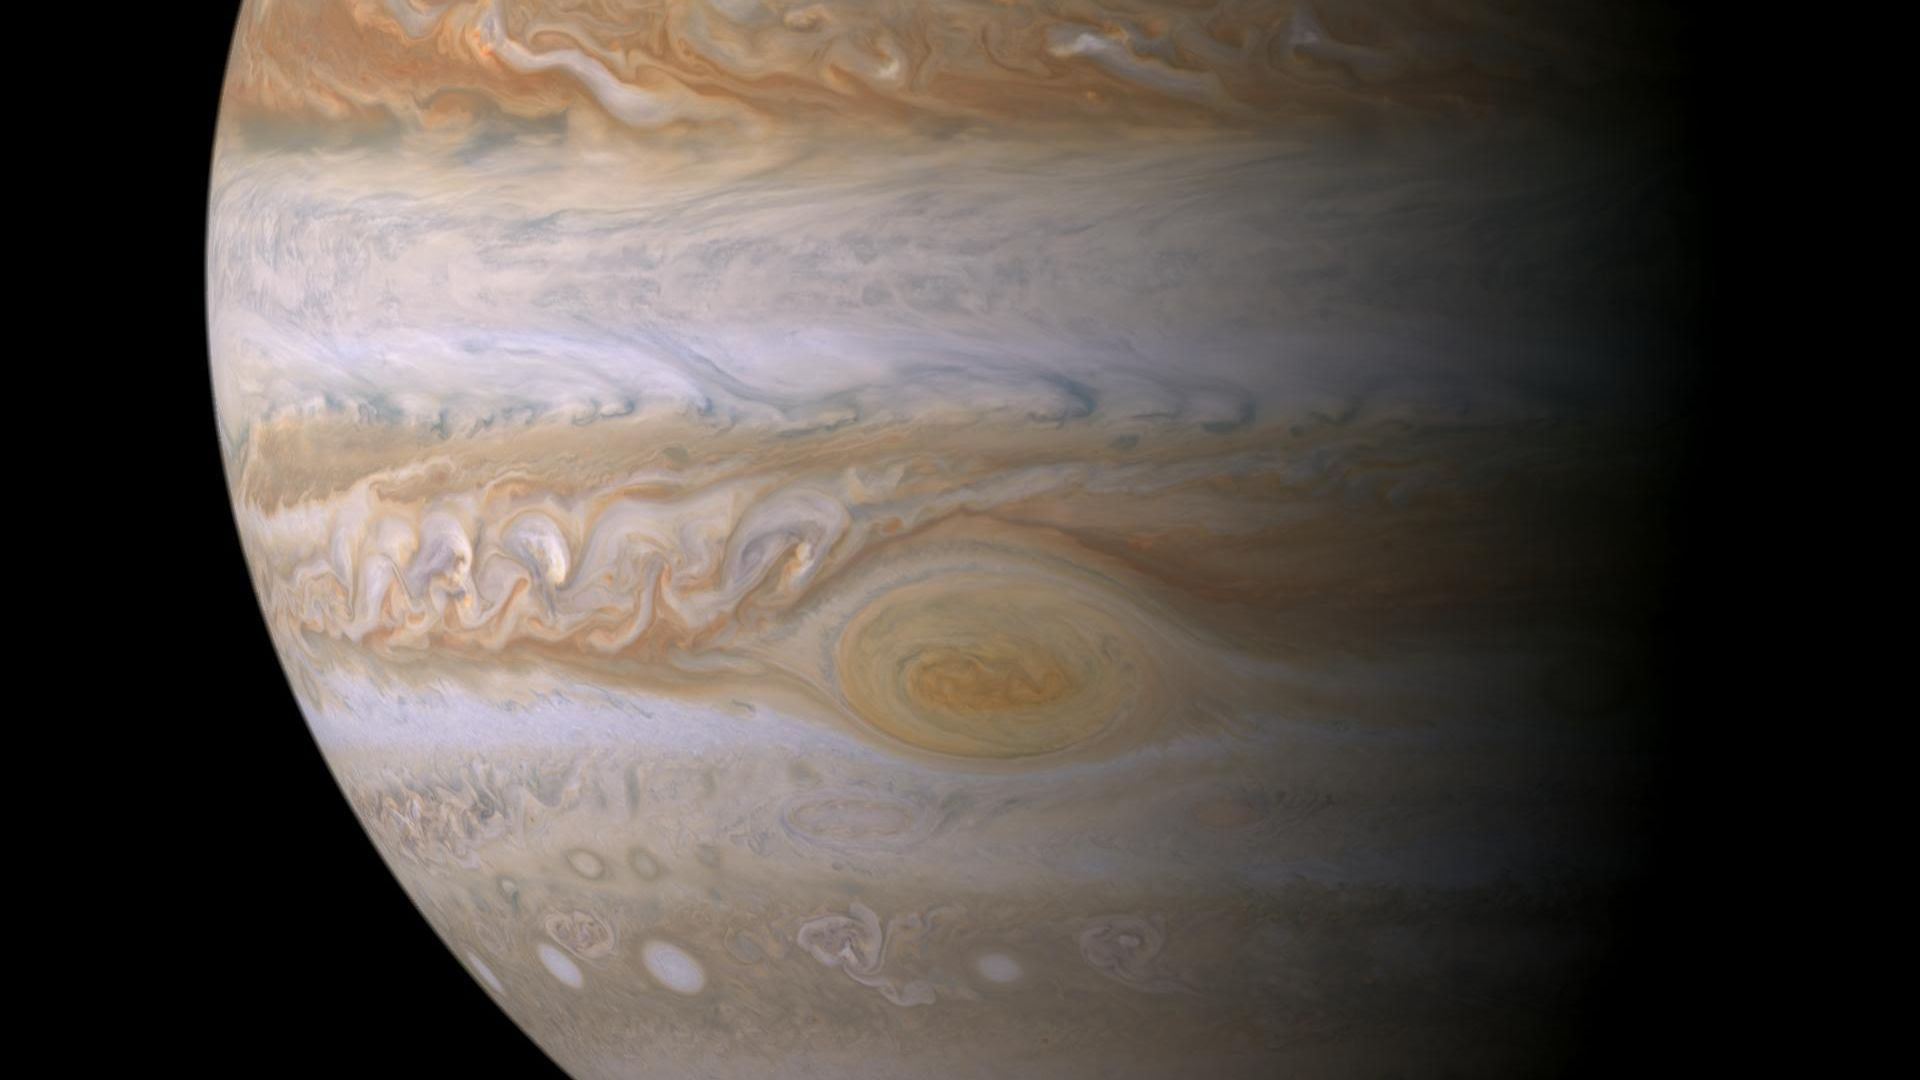 Jupiter as seen by the Cassini spacecraft. Photo: NASA/JPL/SScI